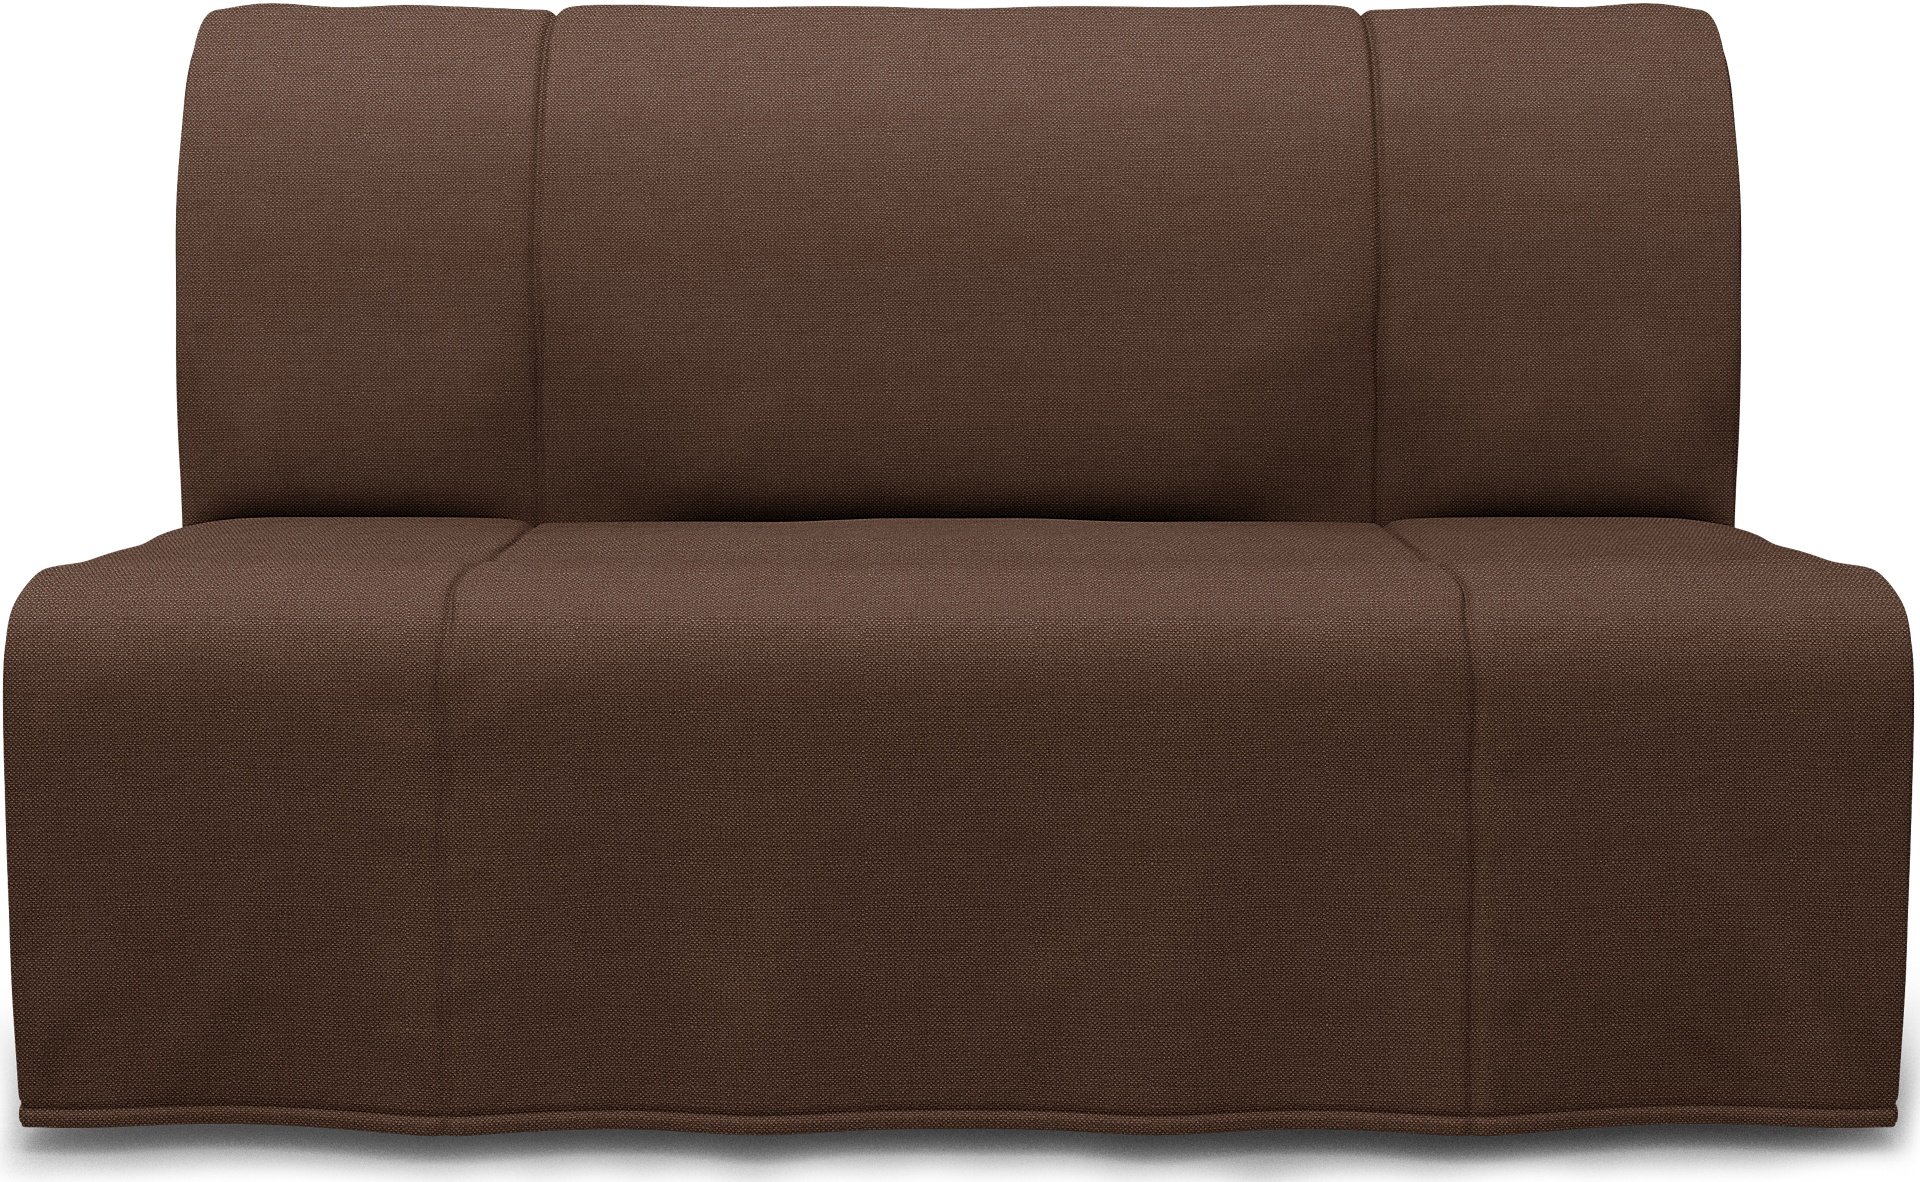 IKEA - Lycksele 2 Seater Bedsofa, Chocolate, Linen - Bemz